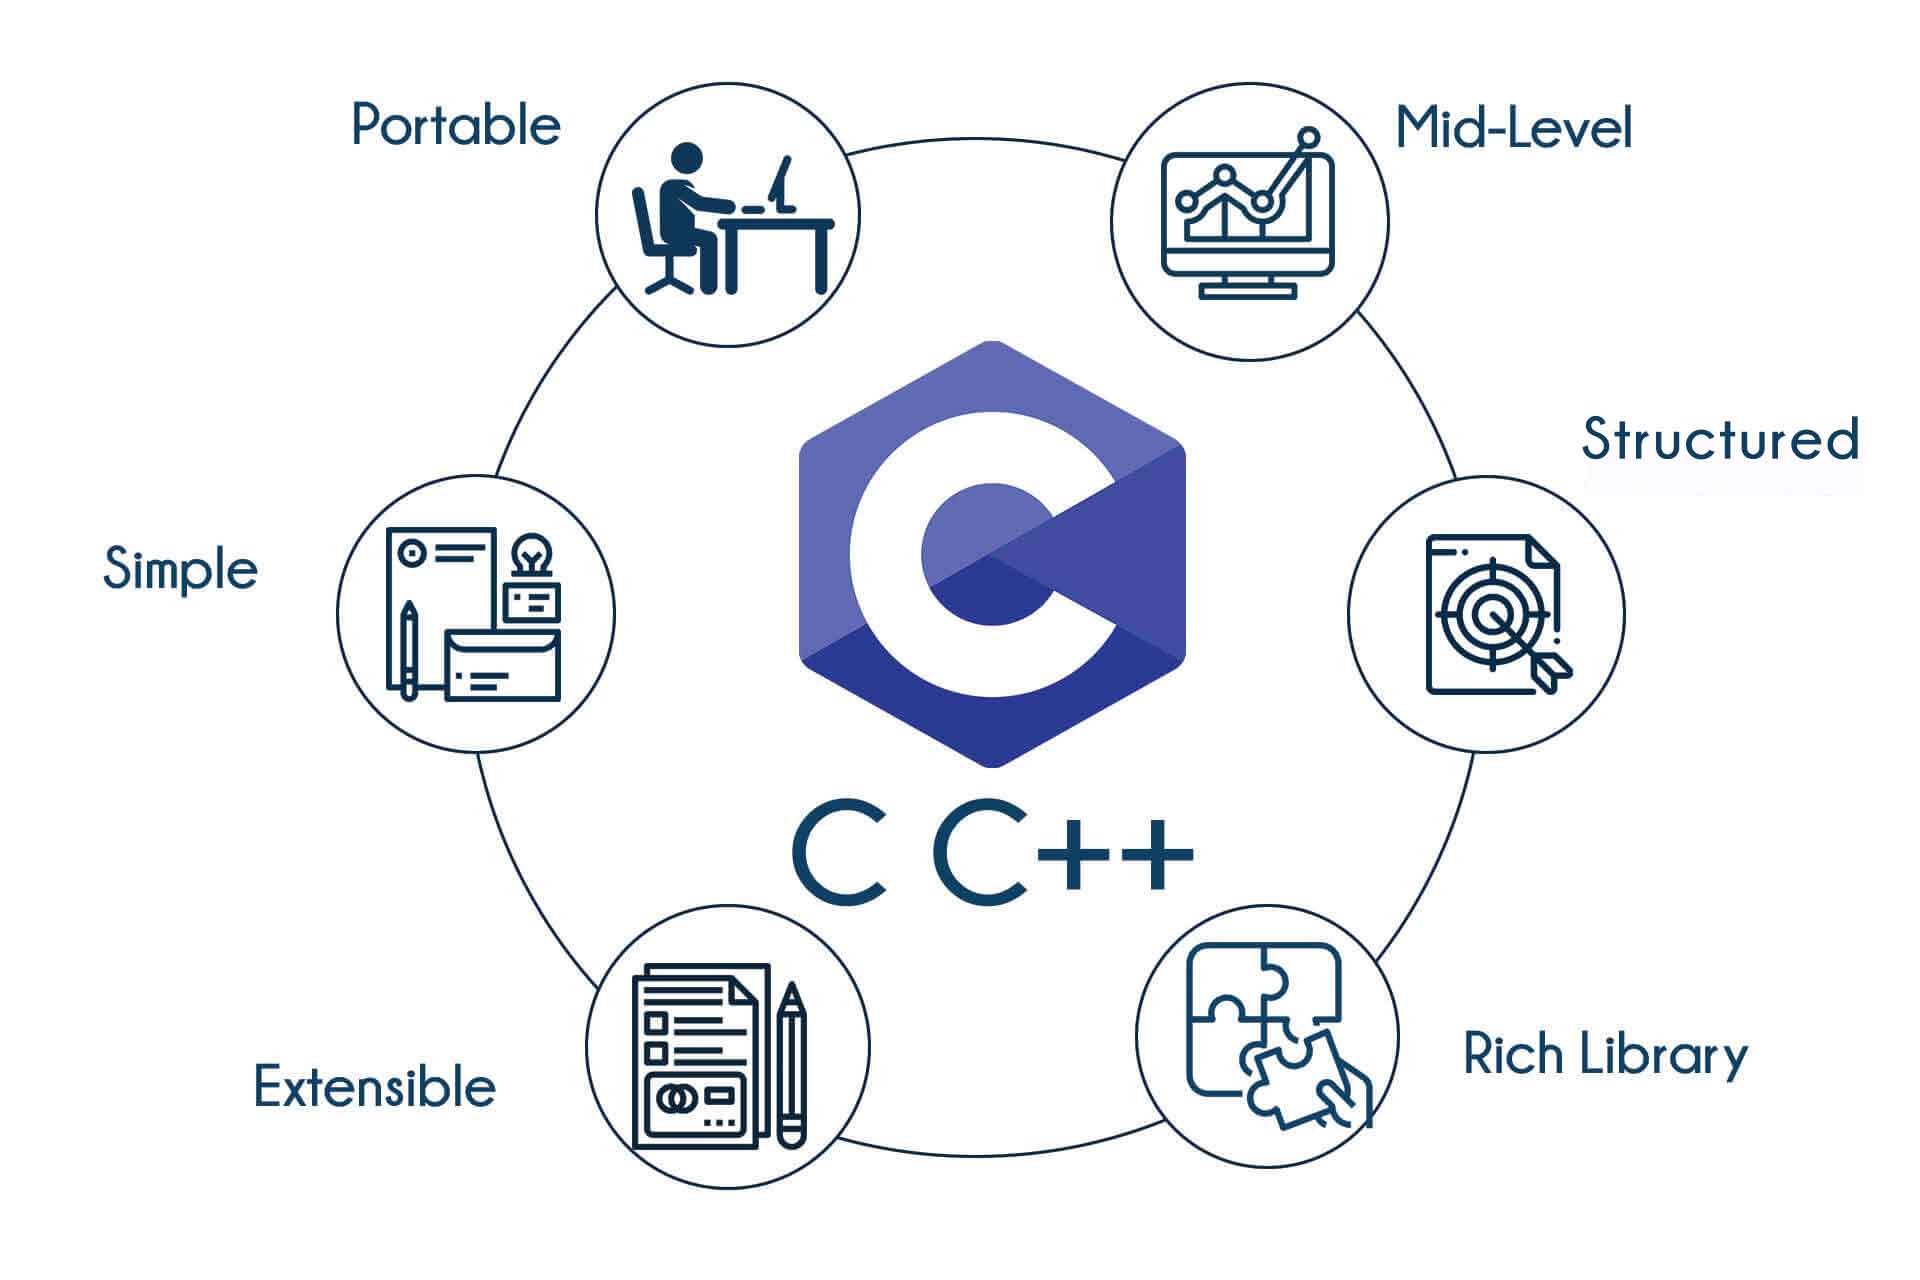 C Programming Languages Courses